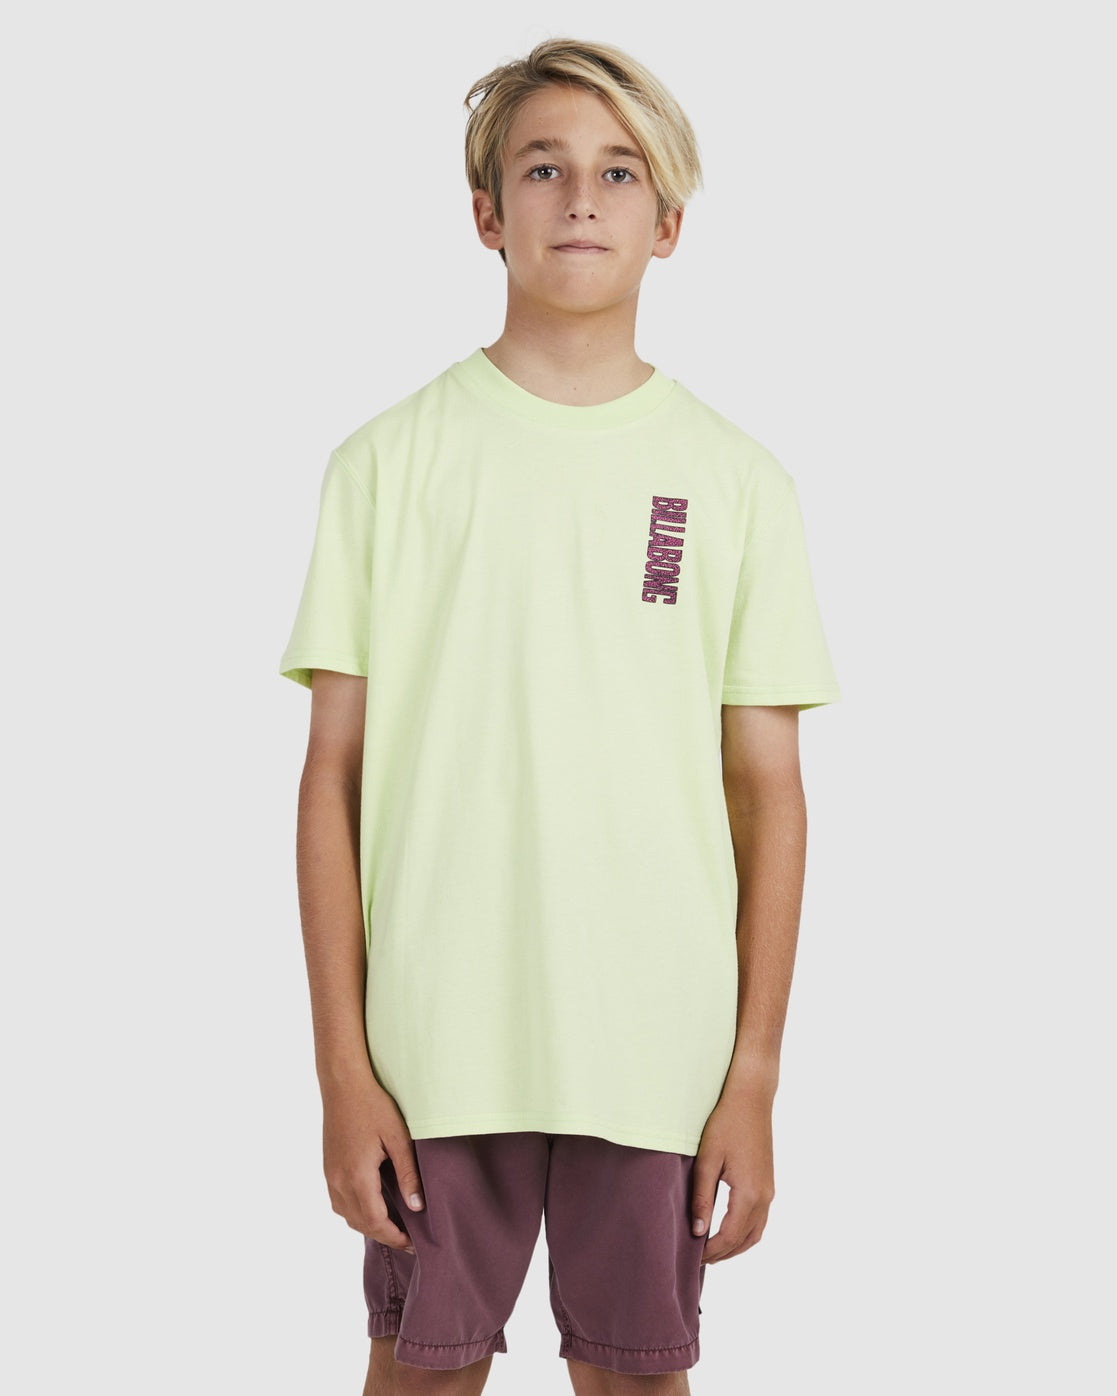 Boys 8-16 New Age T-Shirt